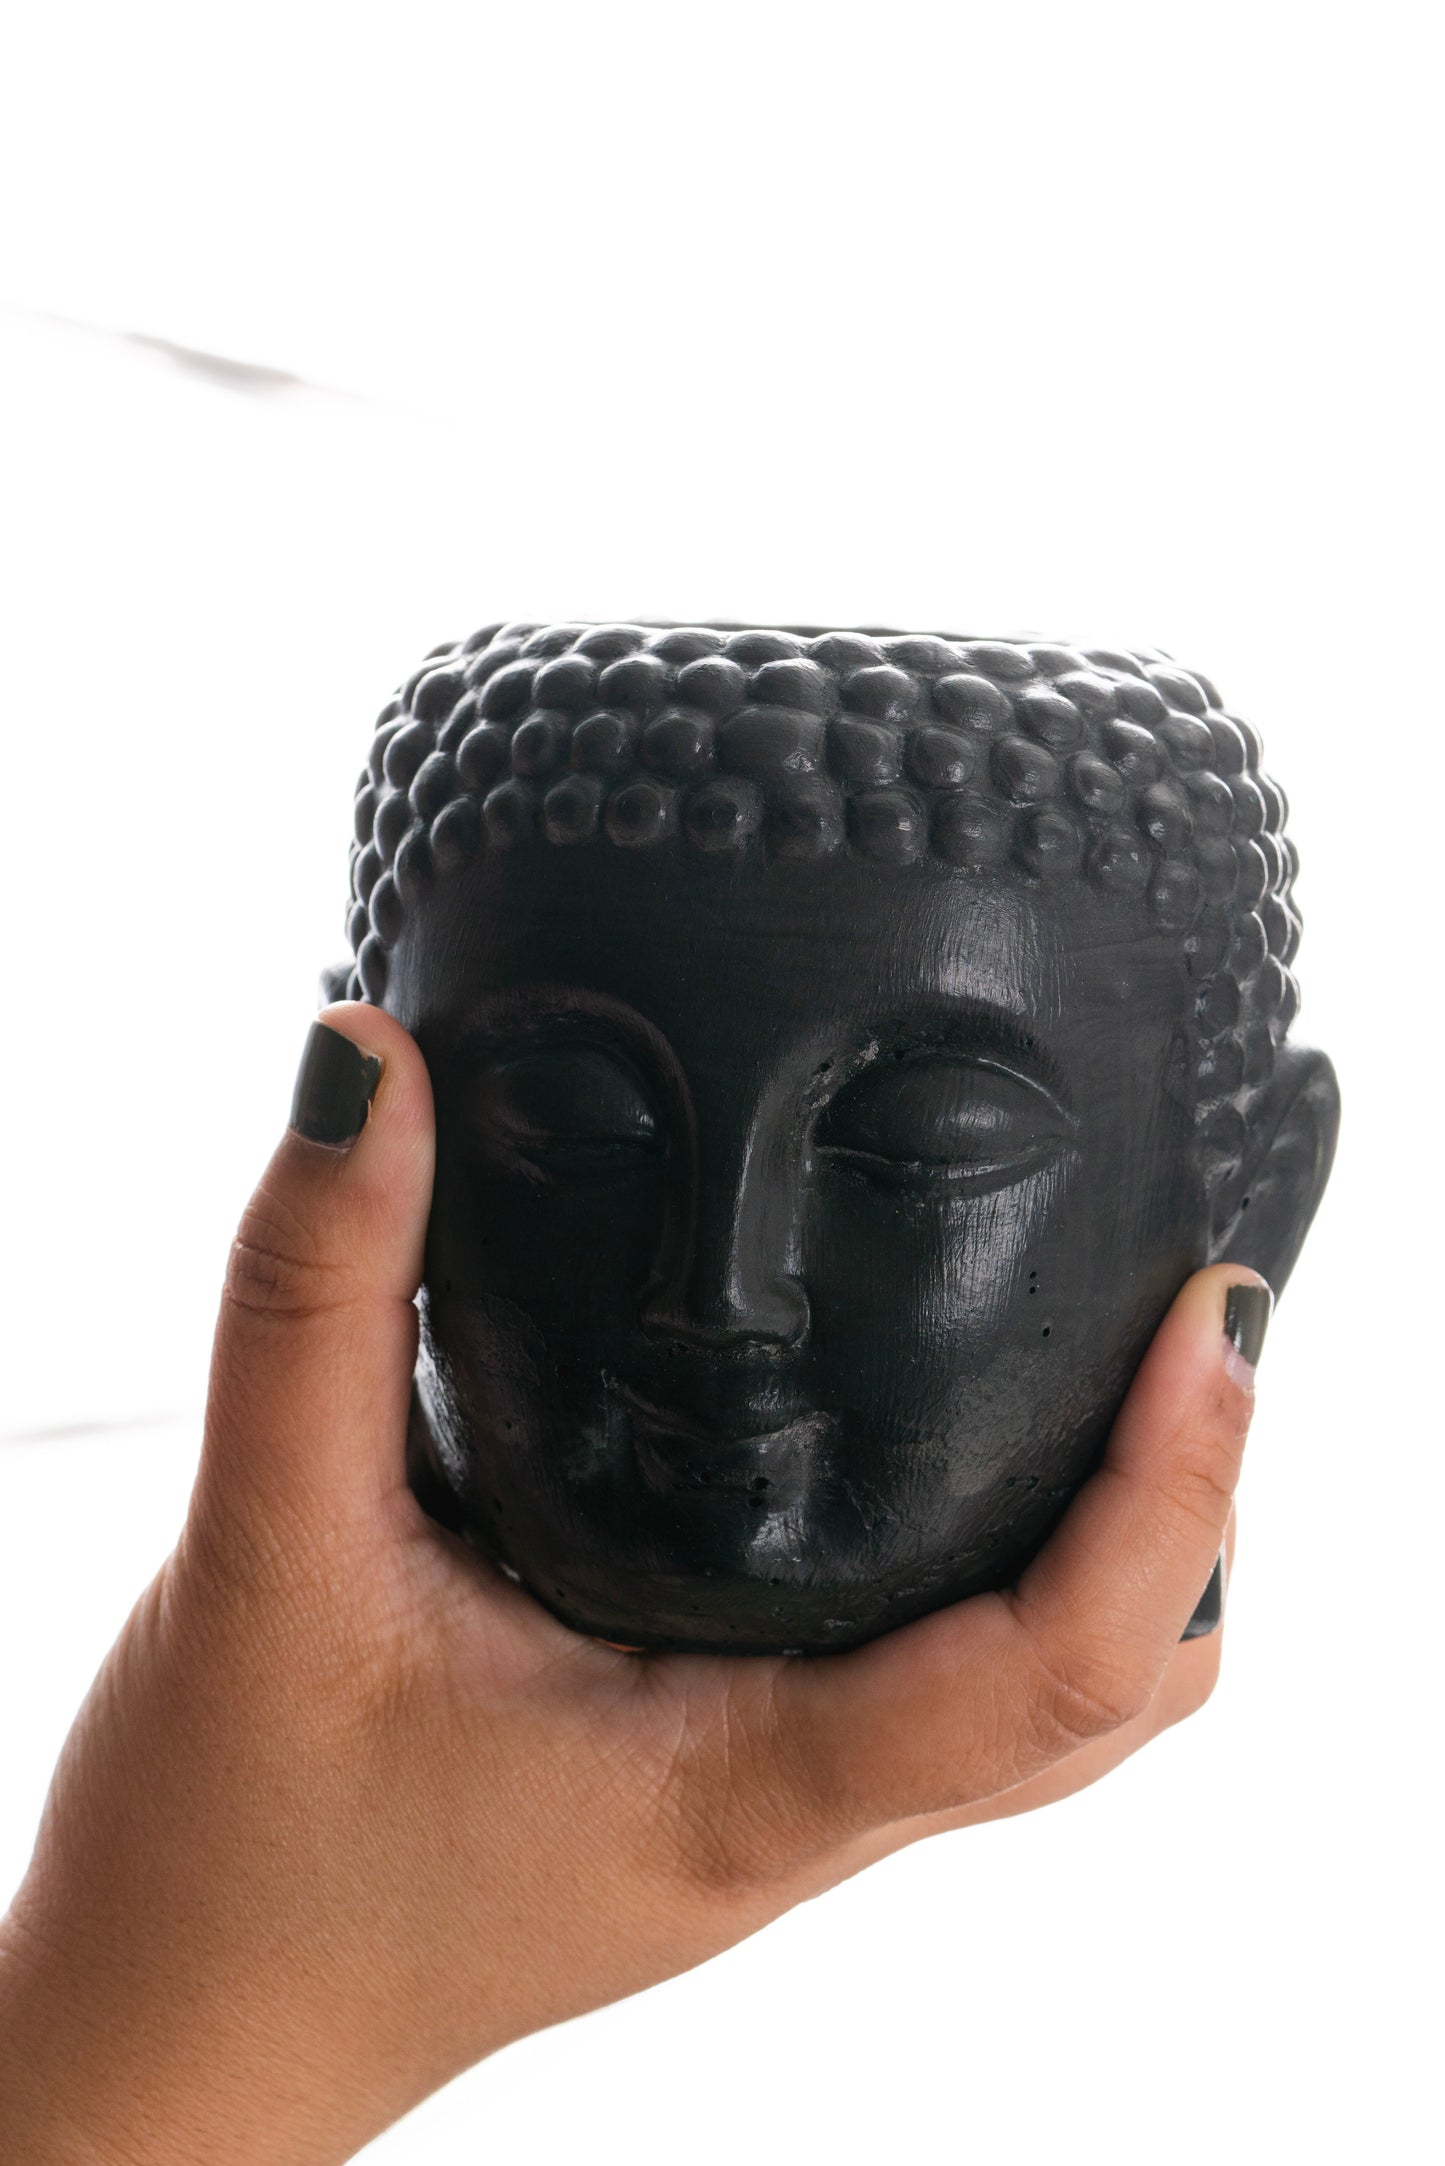 Black Buddha Candle